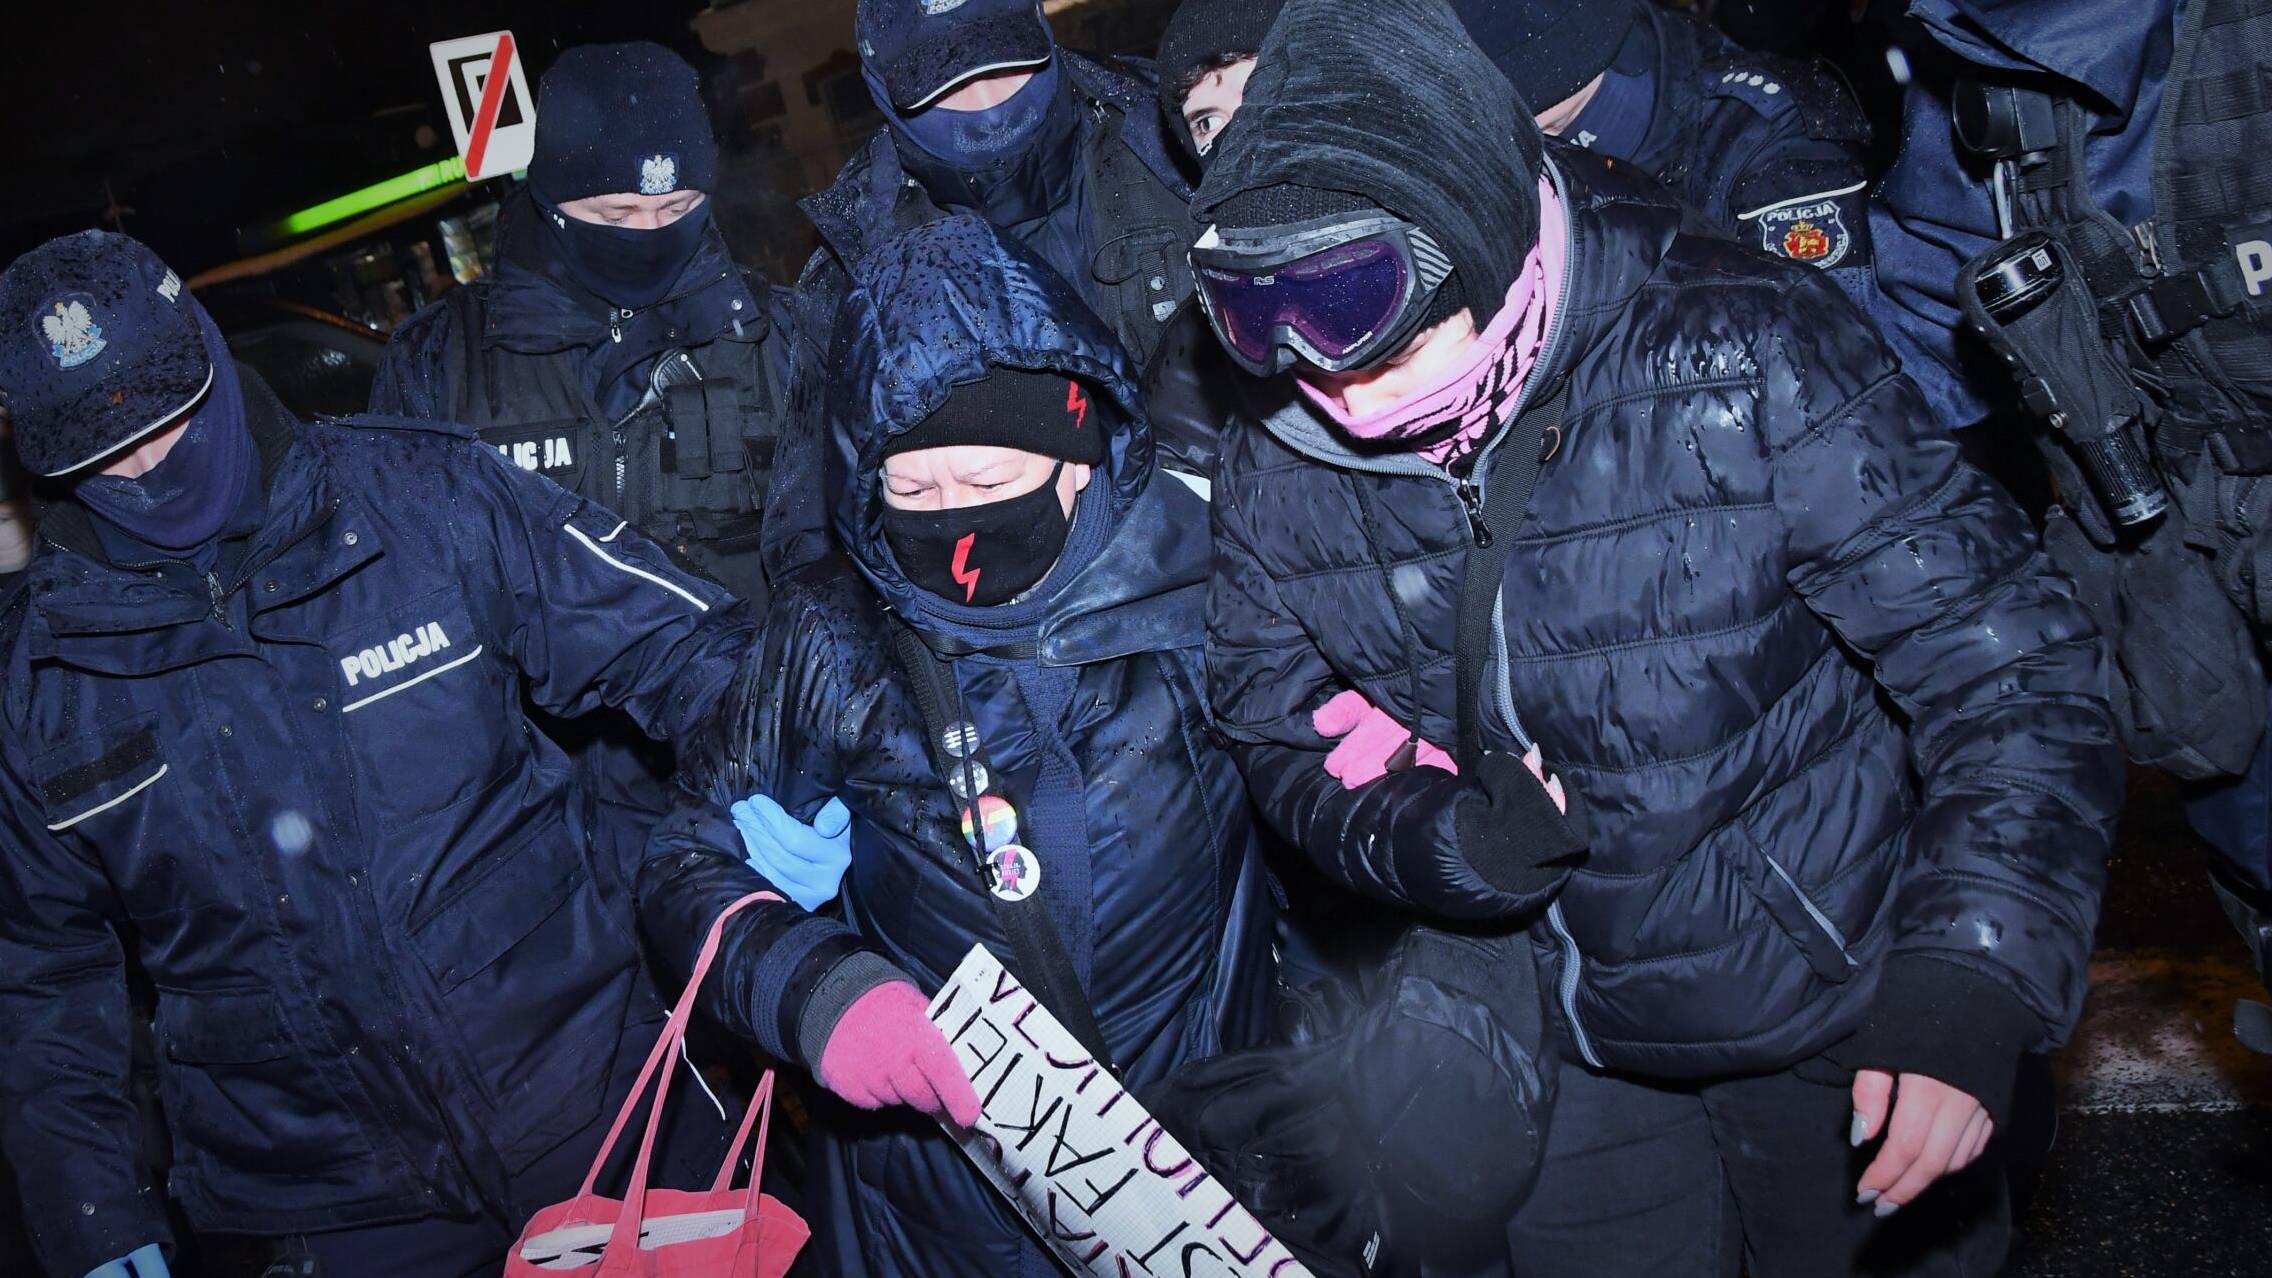 Strajk Kobiet - blokada, Warszawa, 19.02.2021